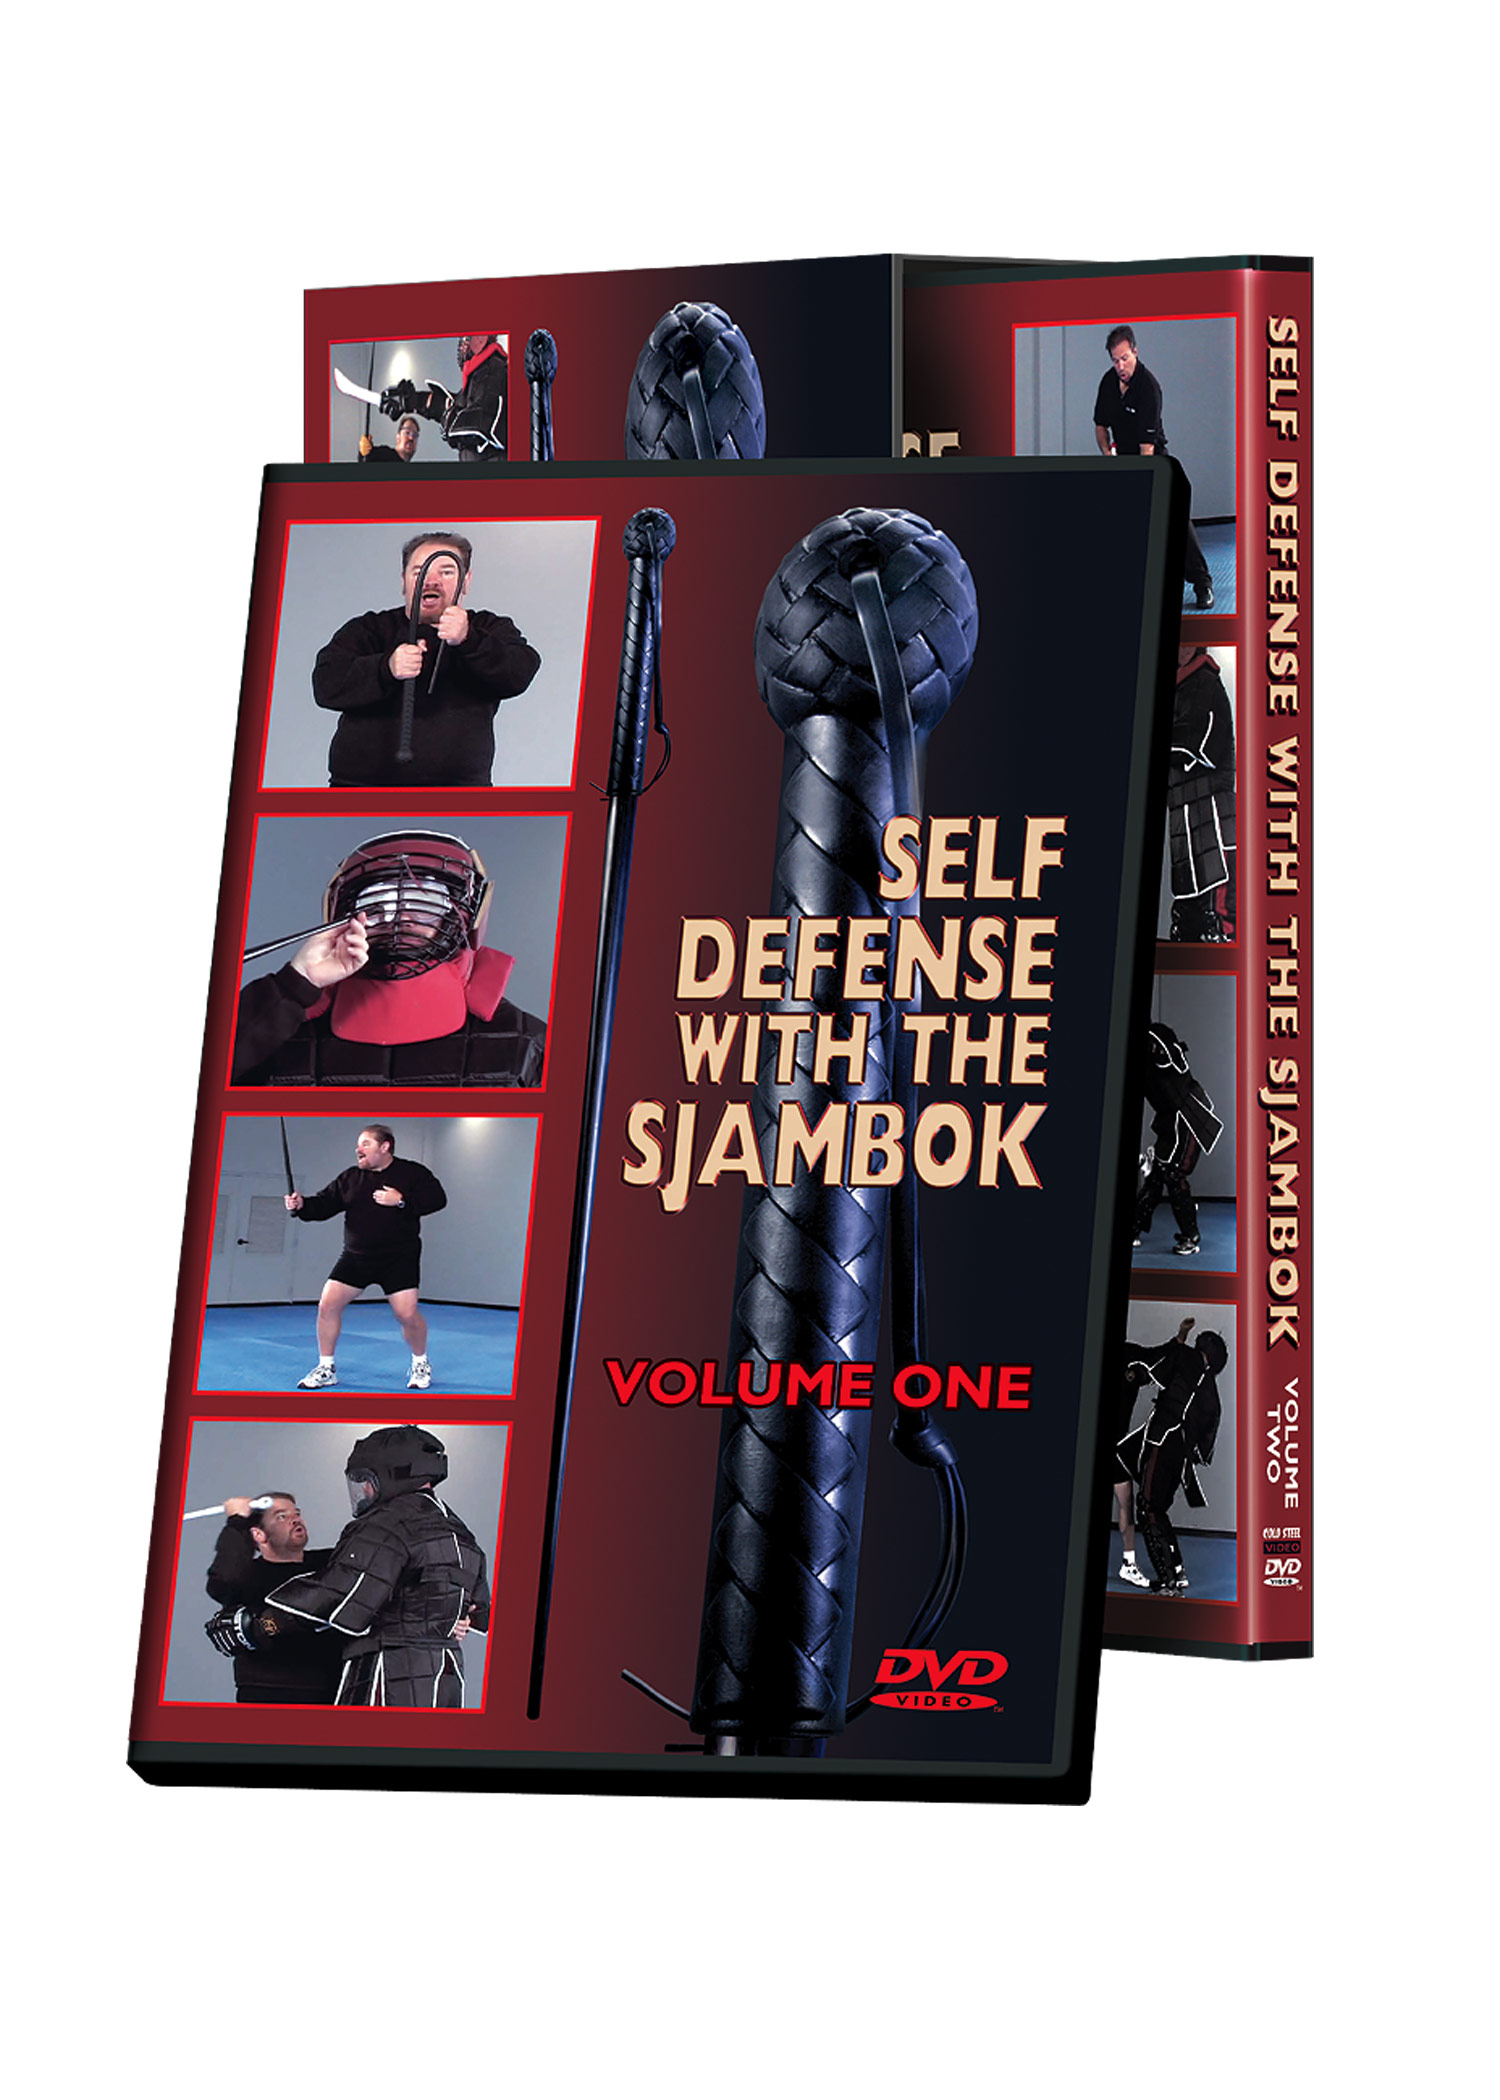 DVD: Self Defense with the Sjambok